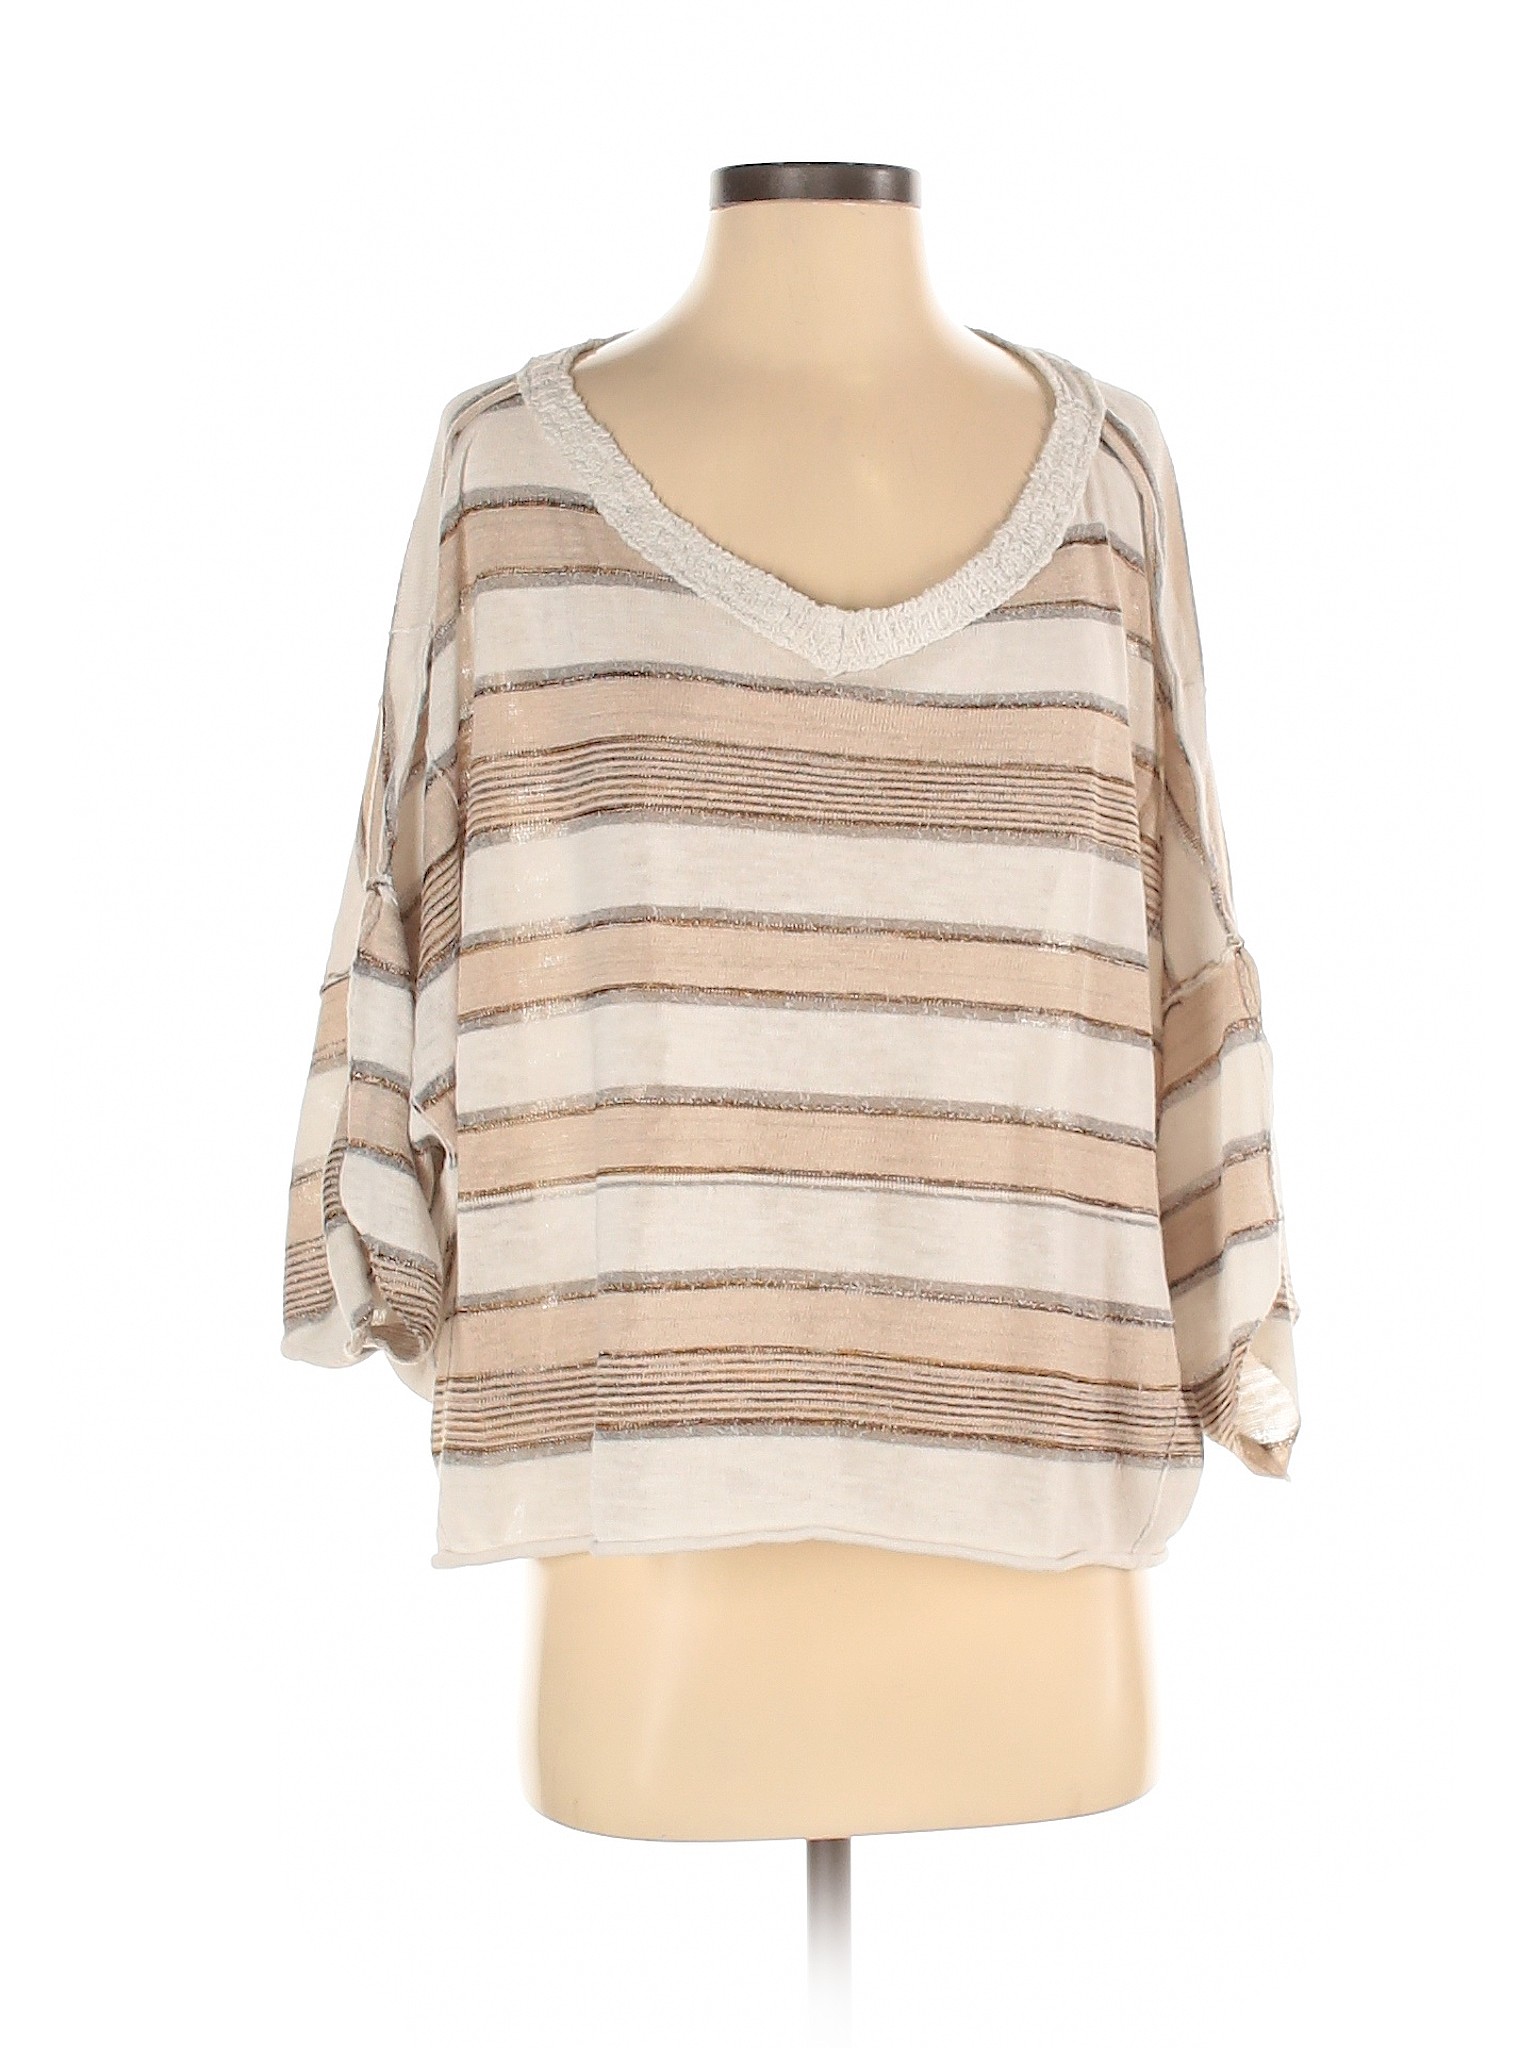 Free People Women Brown Pullover Sweater S | eBay